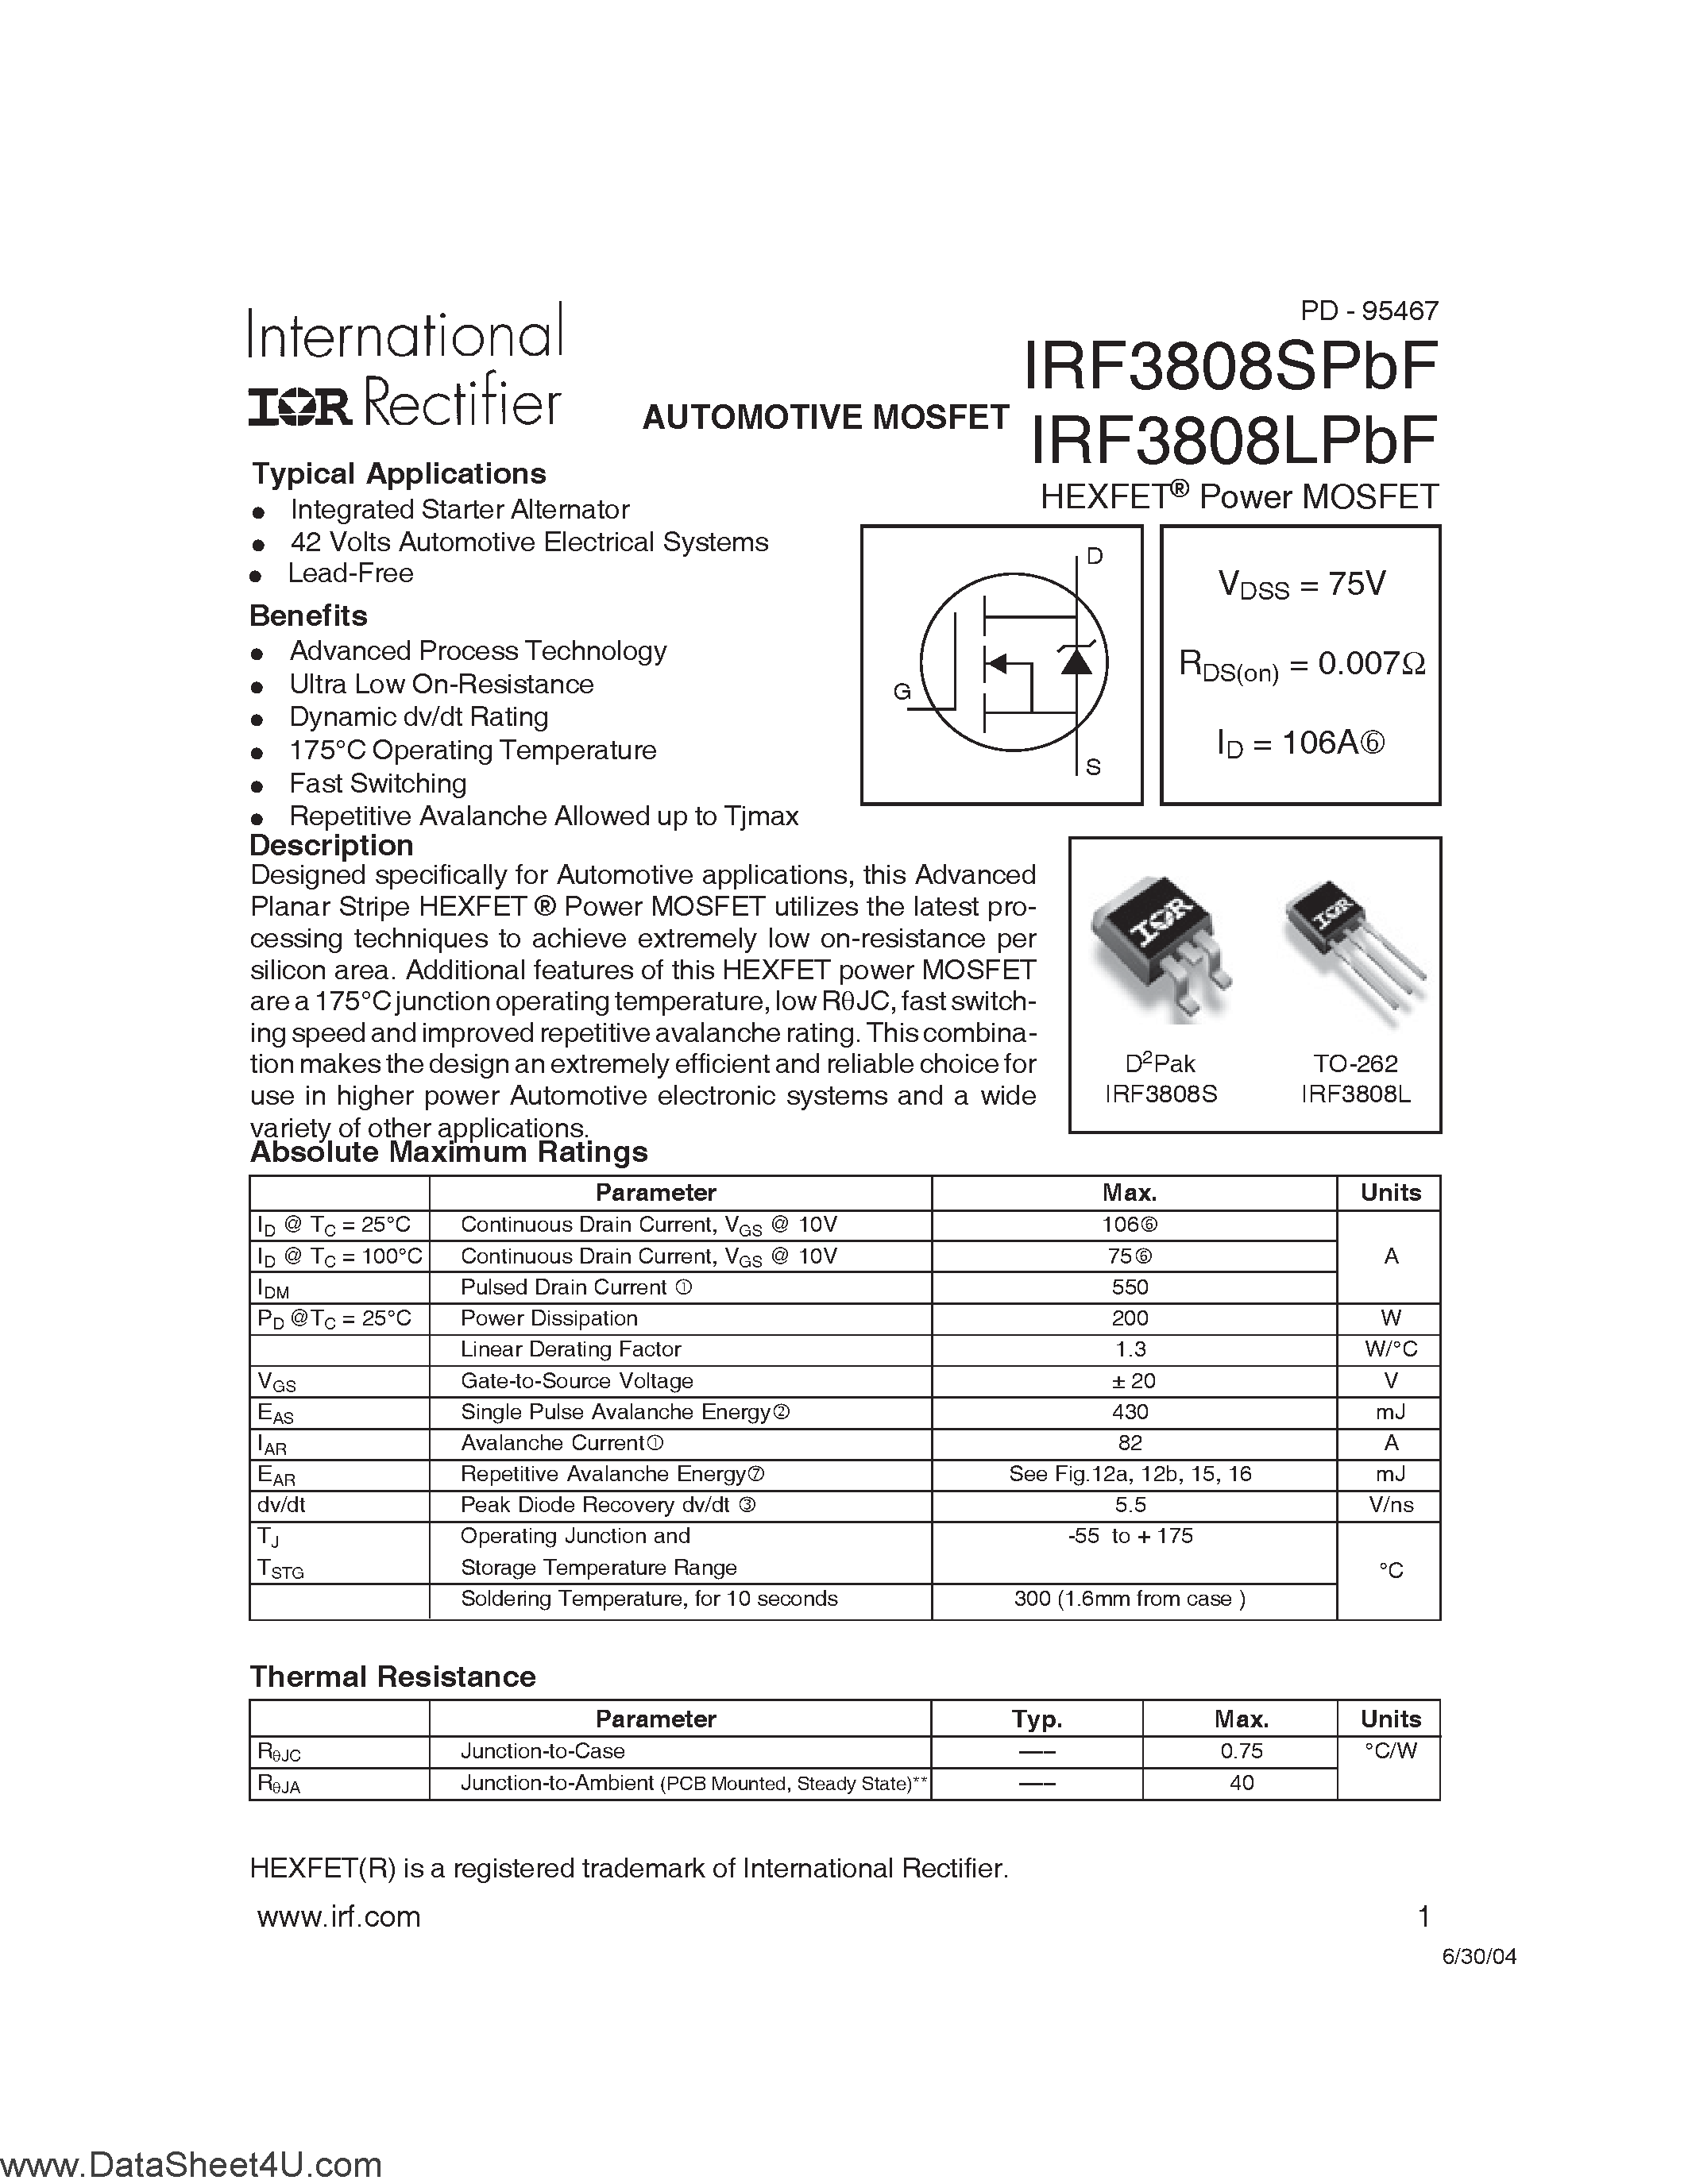 Datasheet IRF3808LPBF - (IRF3808SPBF / IRF3808LPBF) AUTOMOTIVE MOSFET page 1